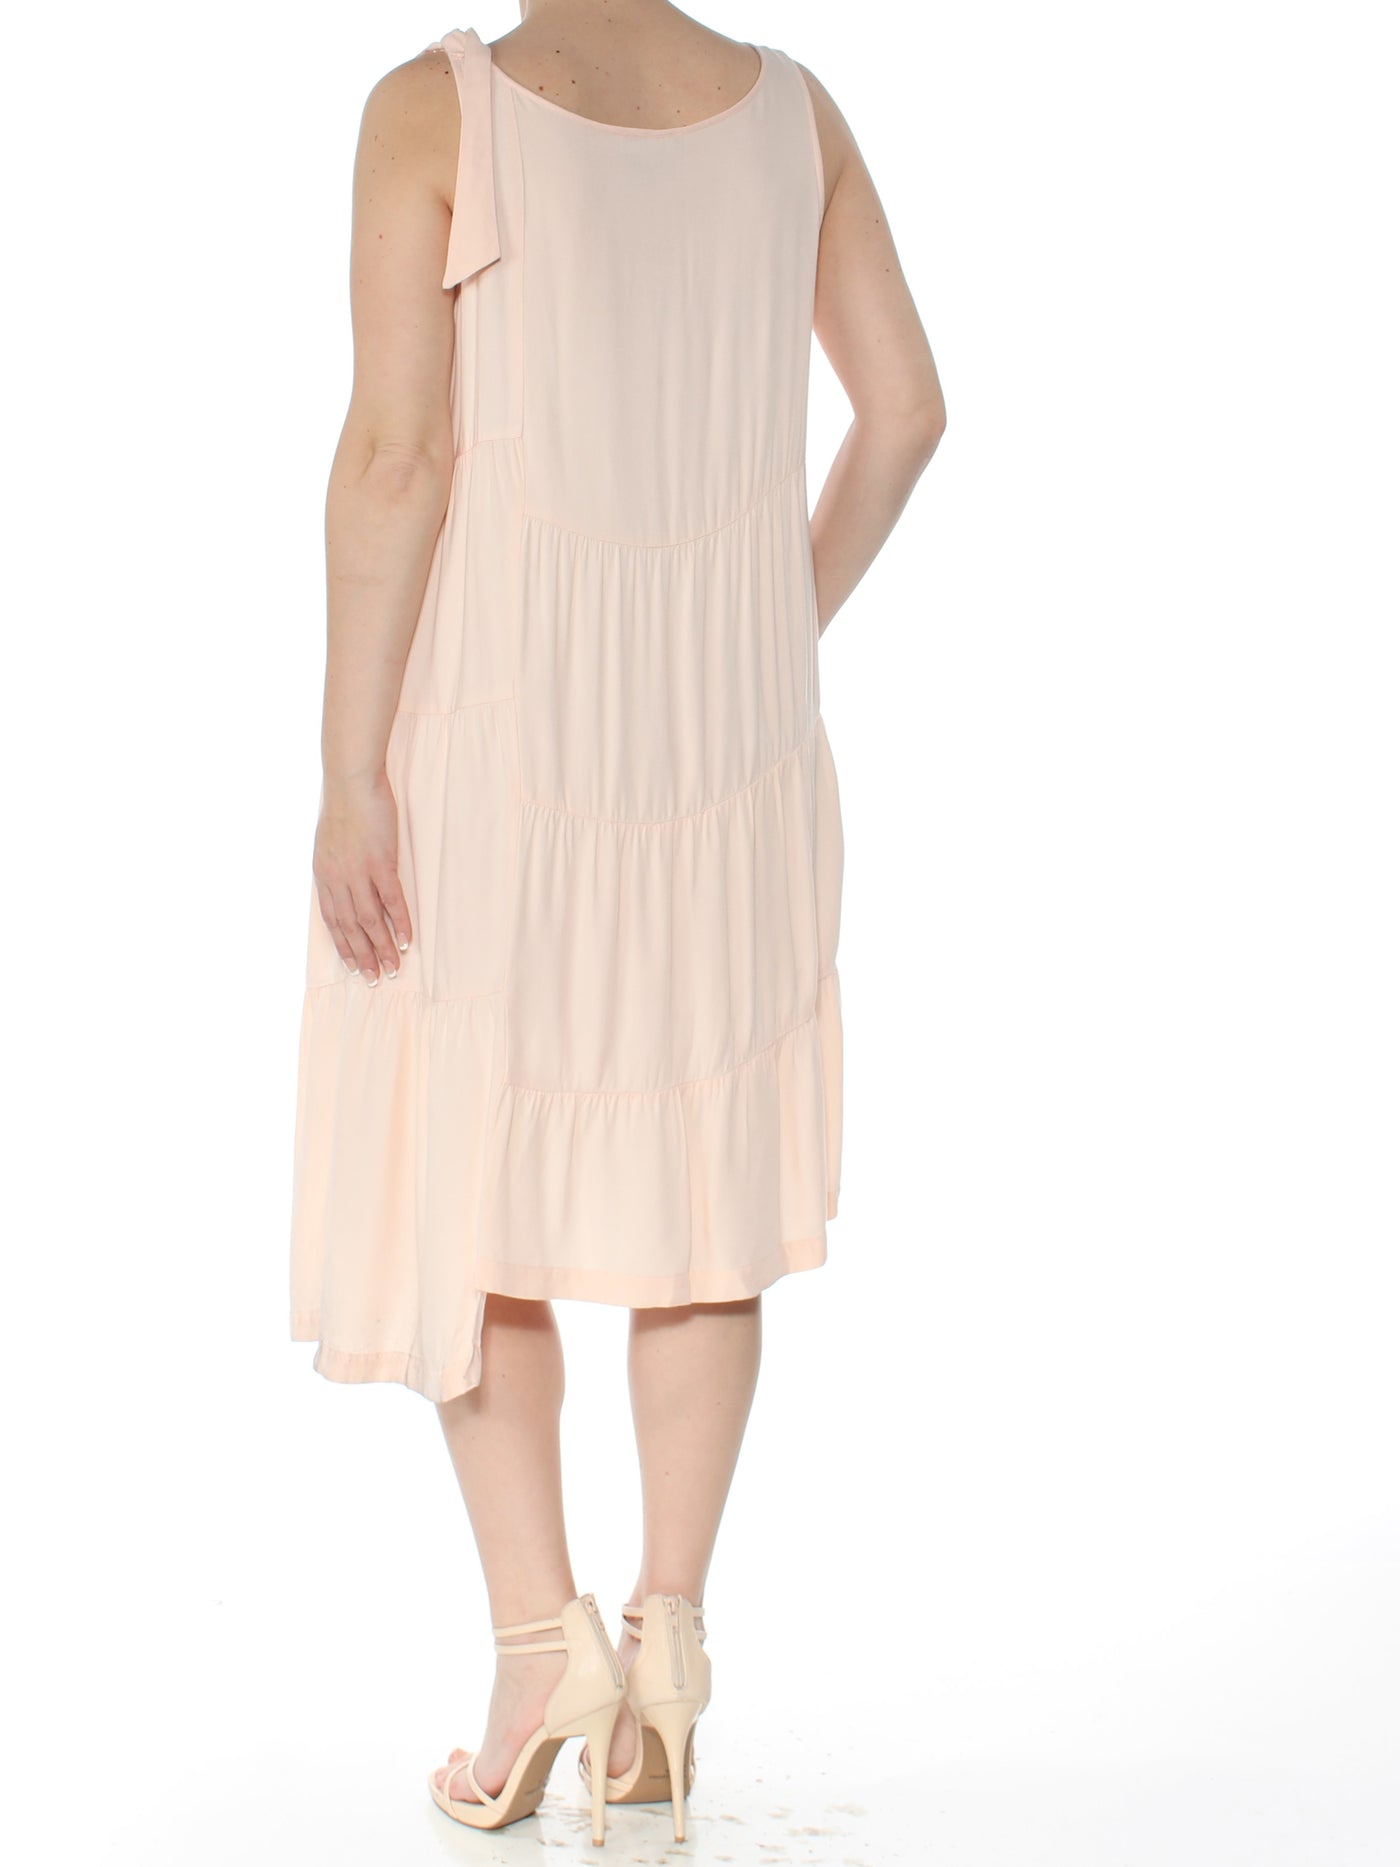 DKNY Womens Pink Asymmetrical Sleeveless Scoop Neck Knee Length Shift Dress